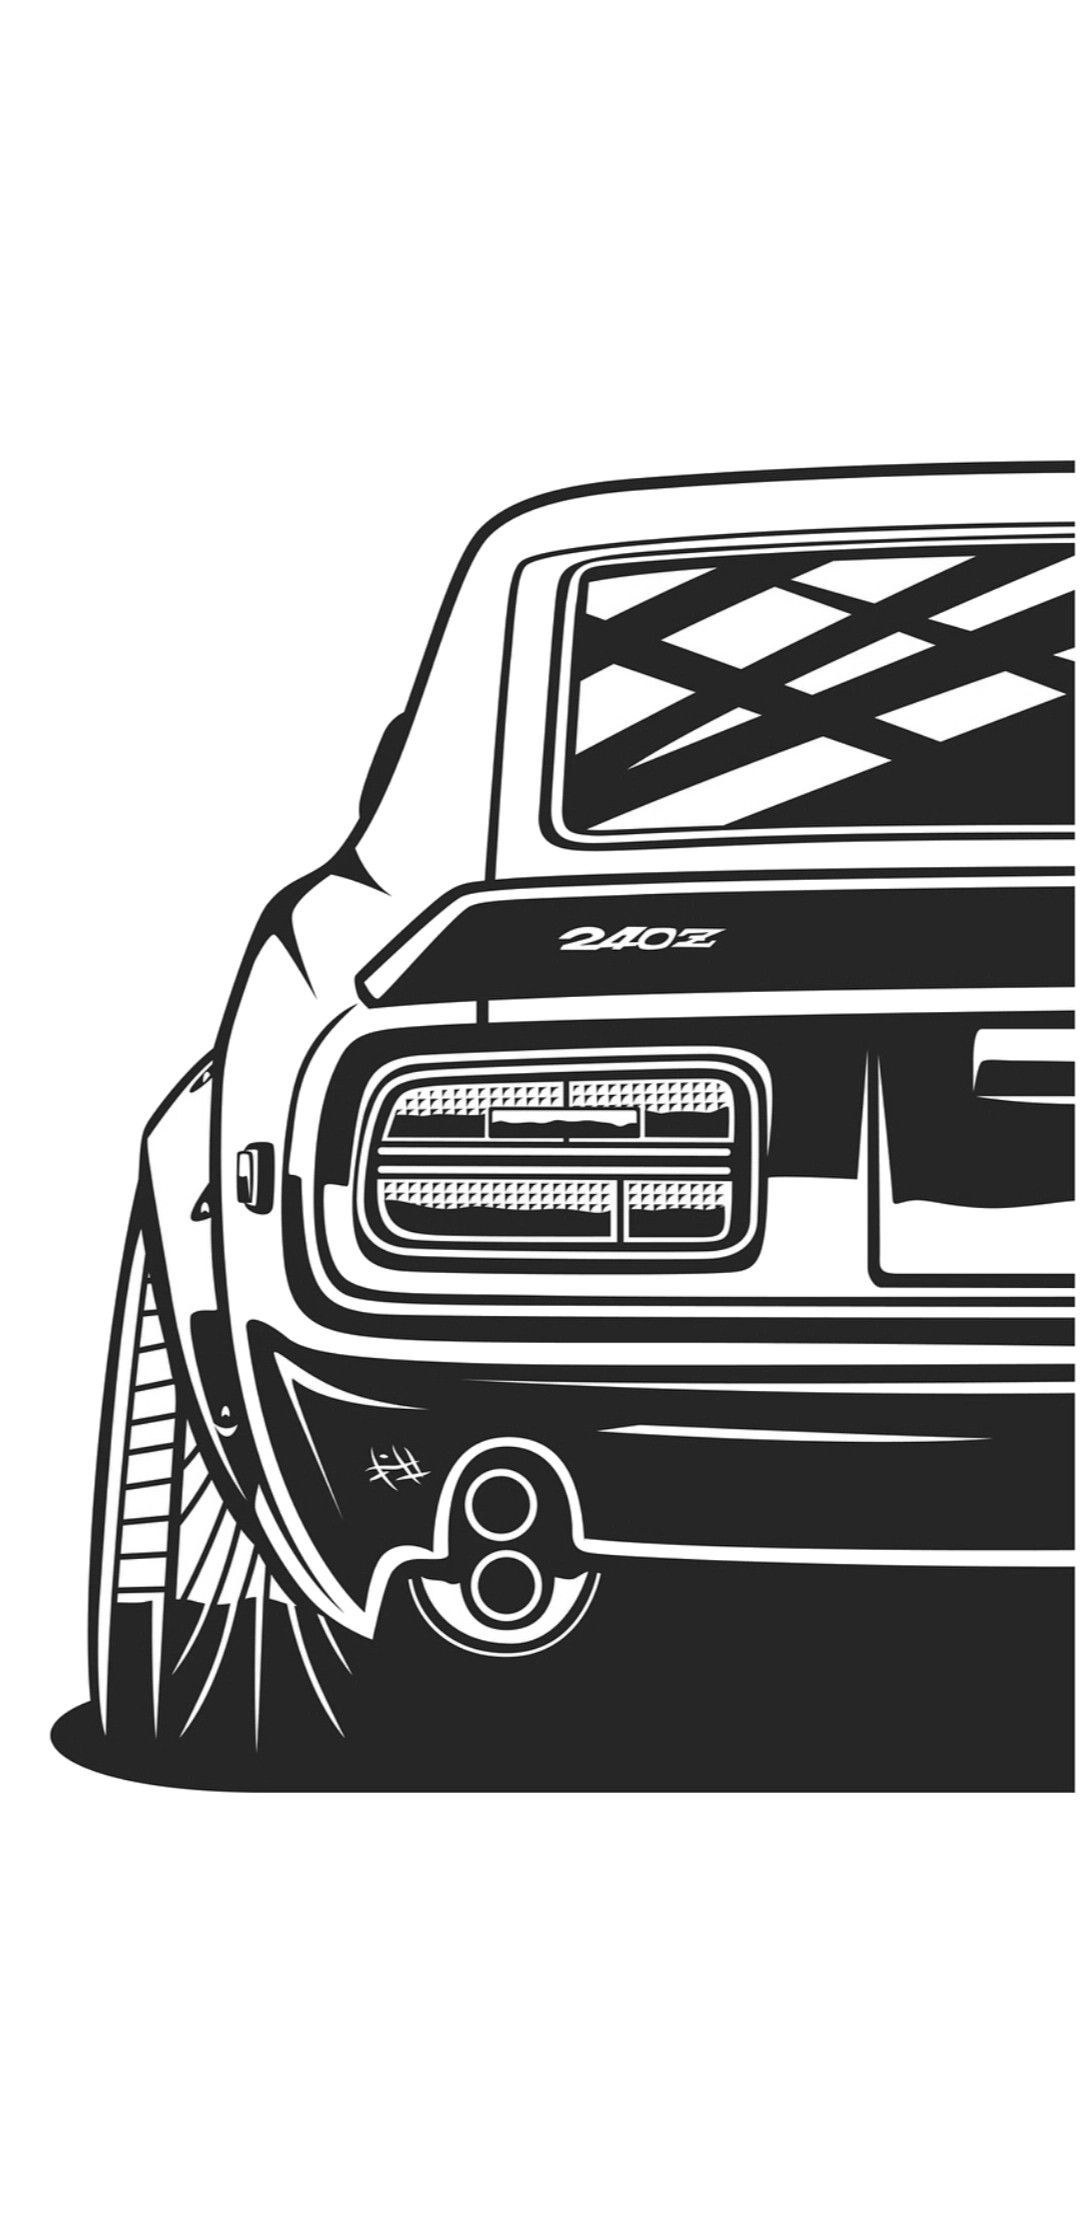 JDM Wallpaper. Jdm cars, Cool car drawings, Car drawings